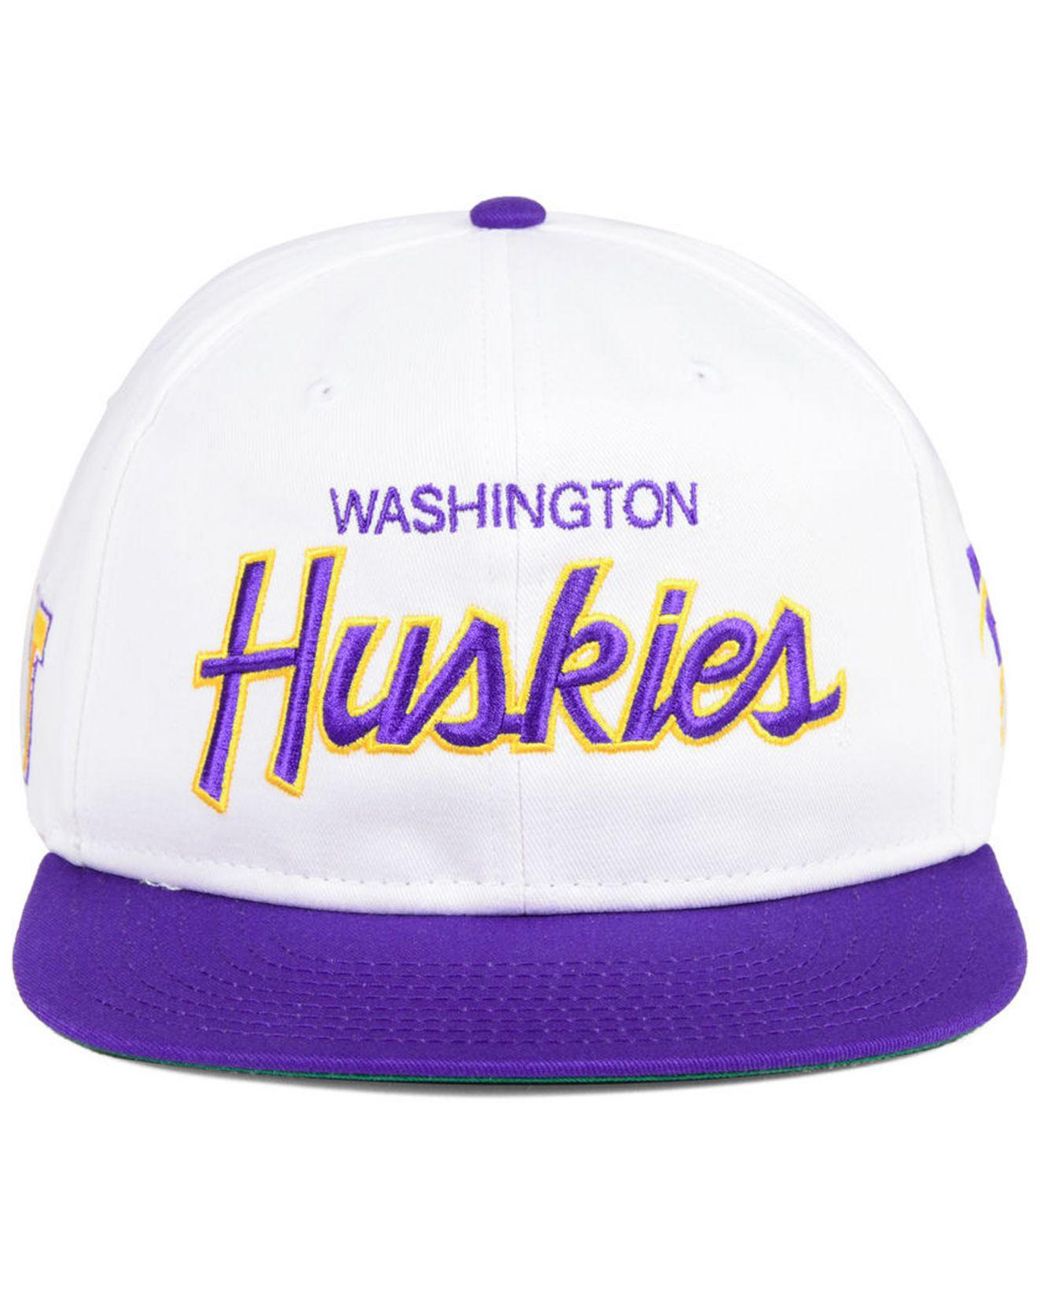 NCAA Washington Huskies Unstructured Washed Cotton Hat